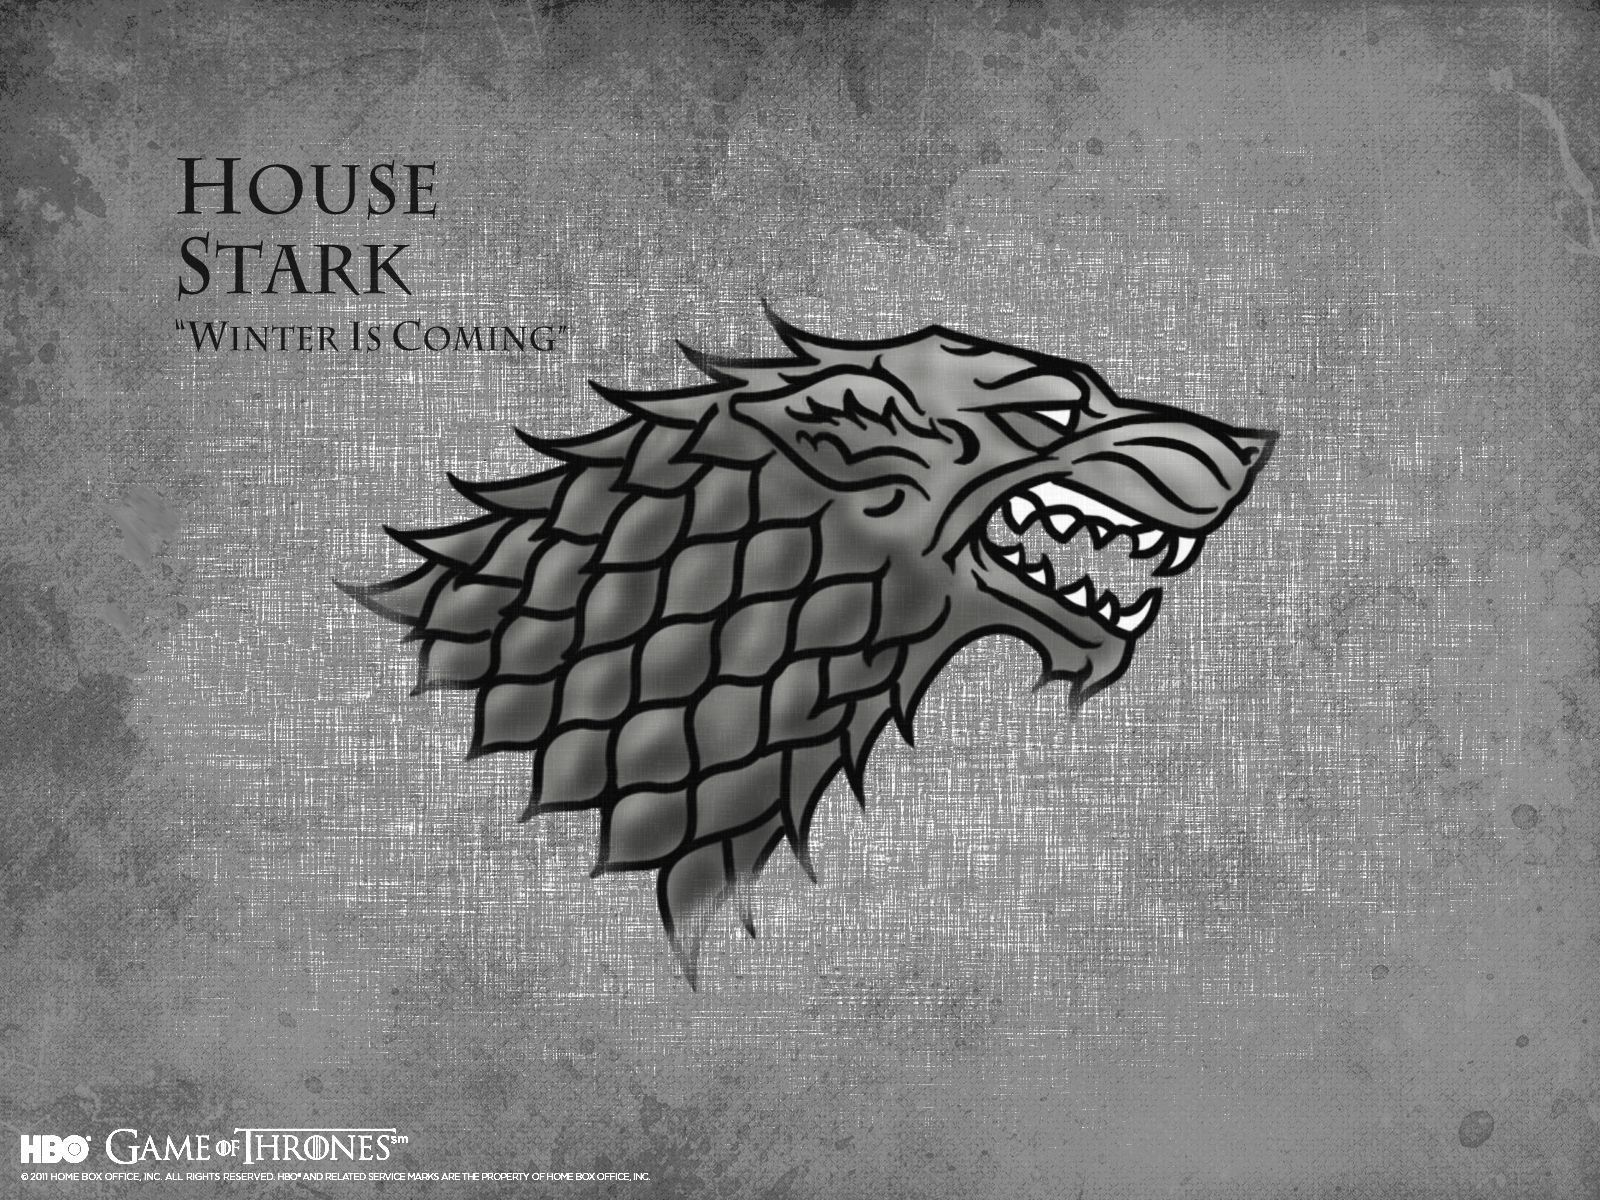 House Stark - Game of Thrones Wallpaper 31246389 - Fanpop